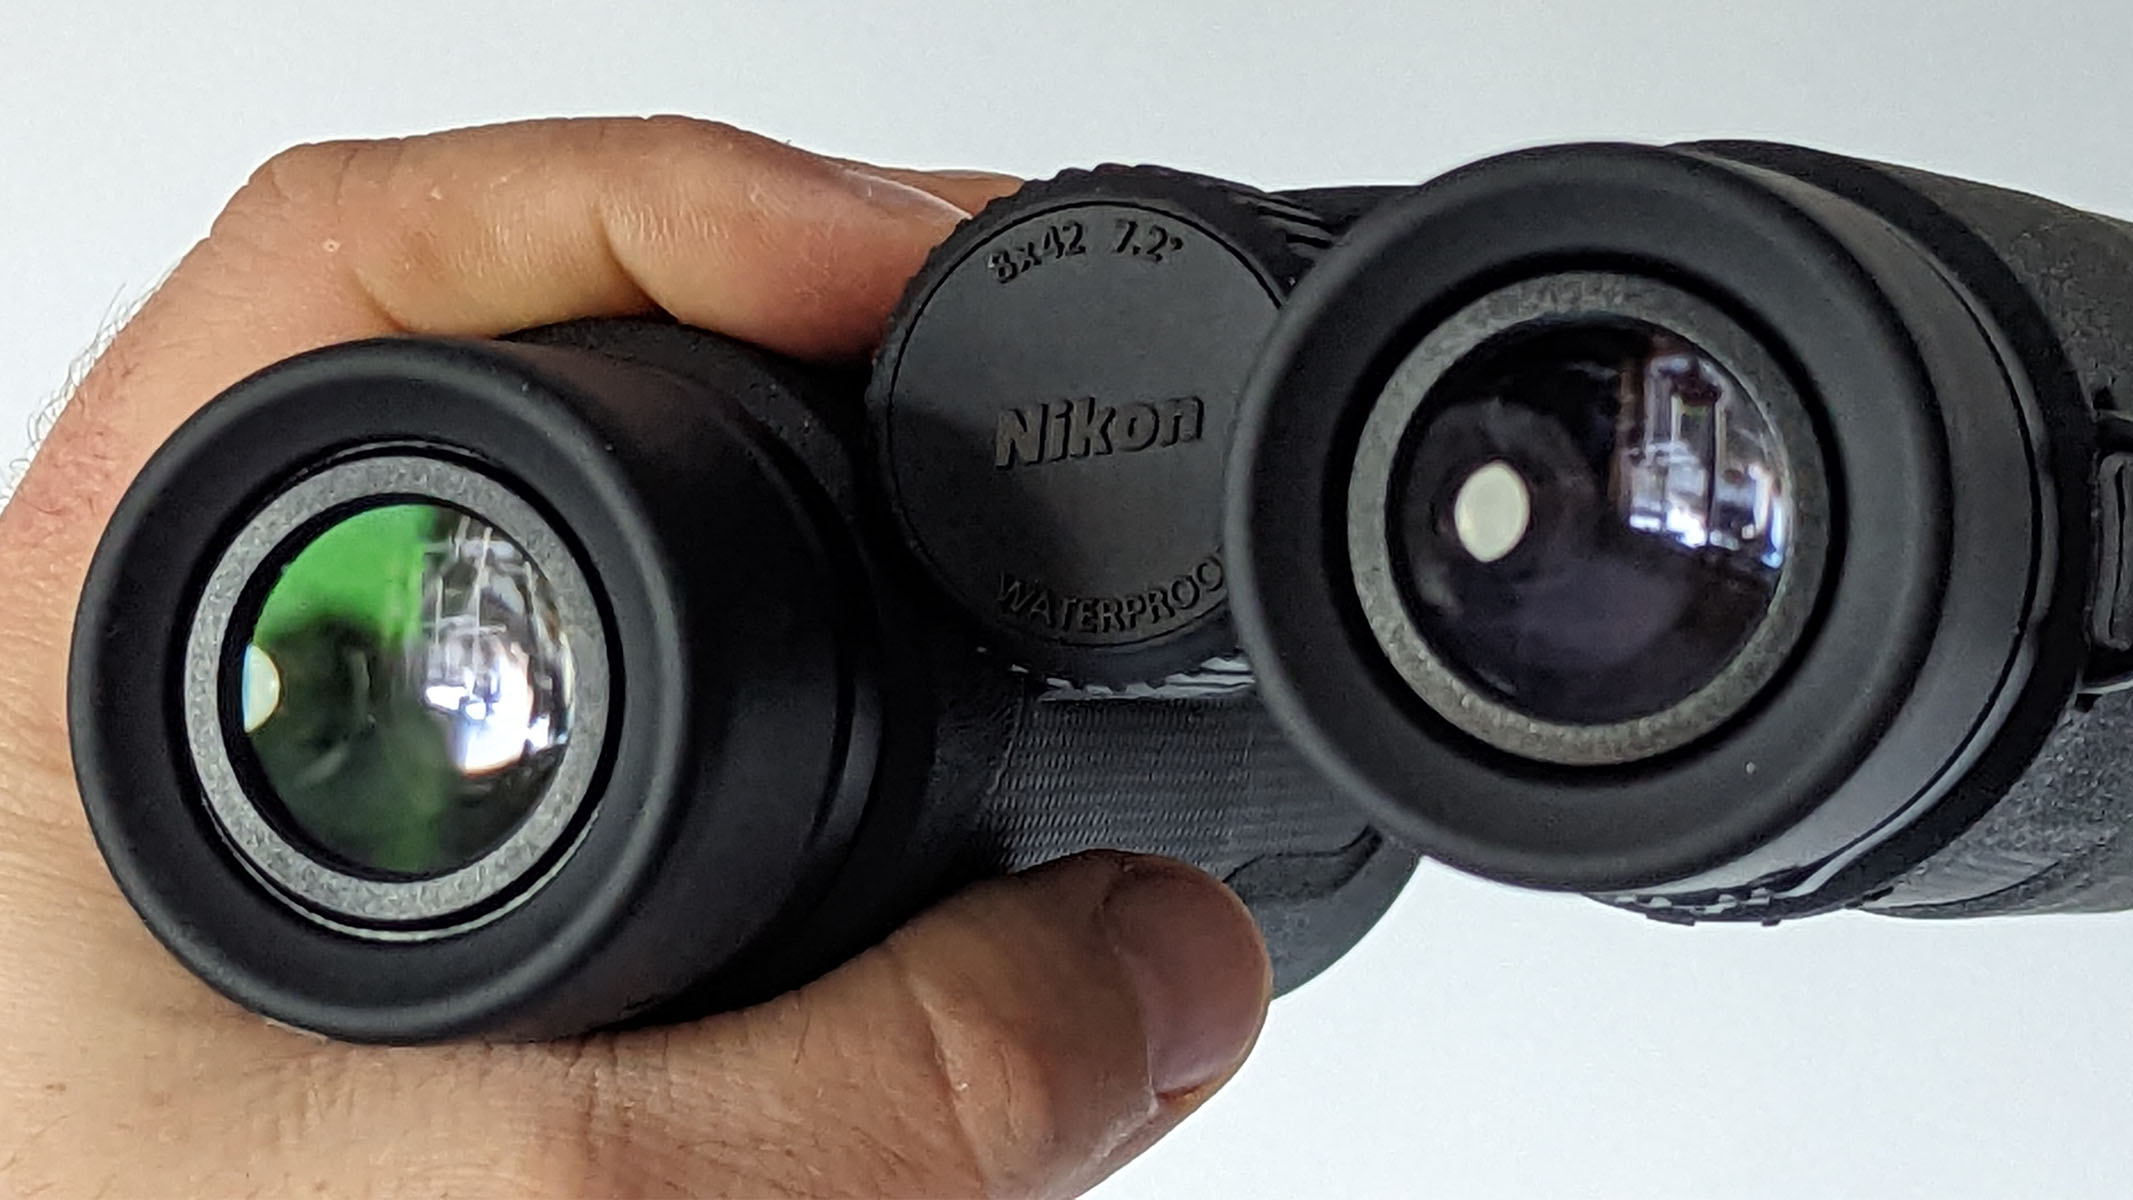 Nikon Prostaff P3 8x42 binoculars eye lenses close up.